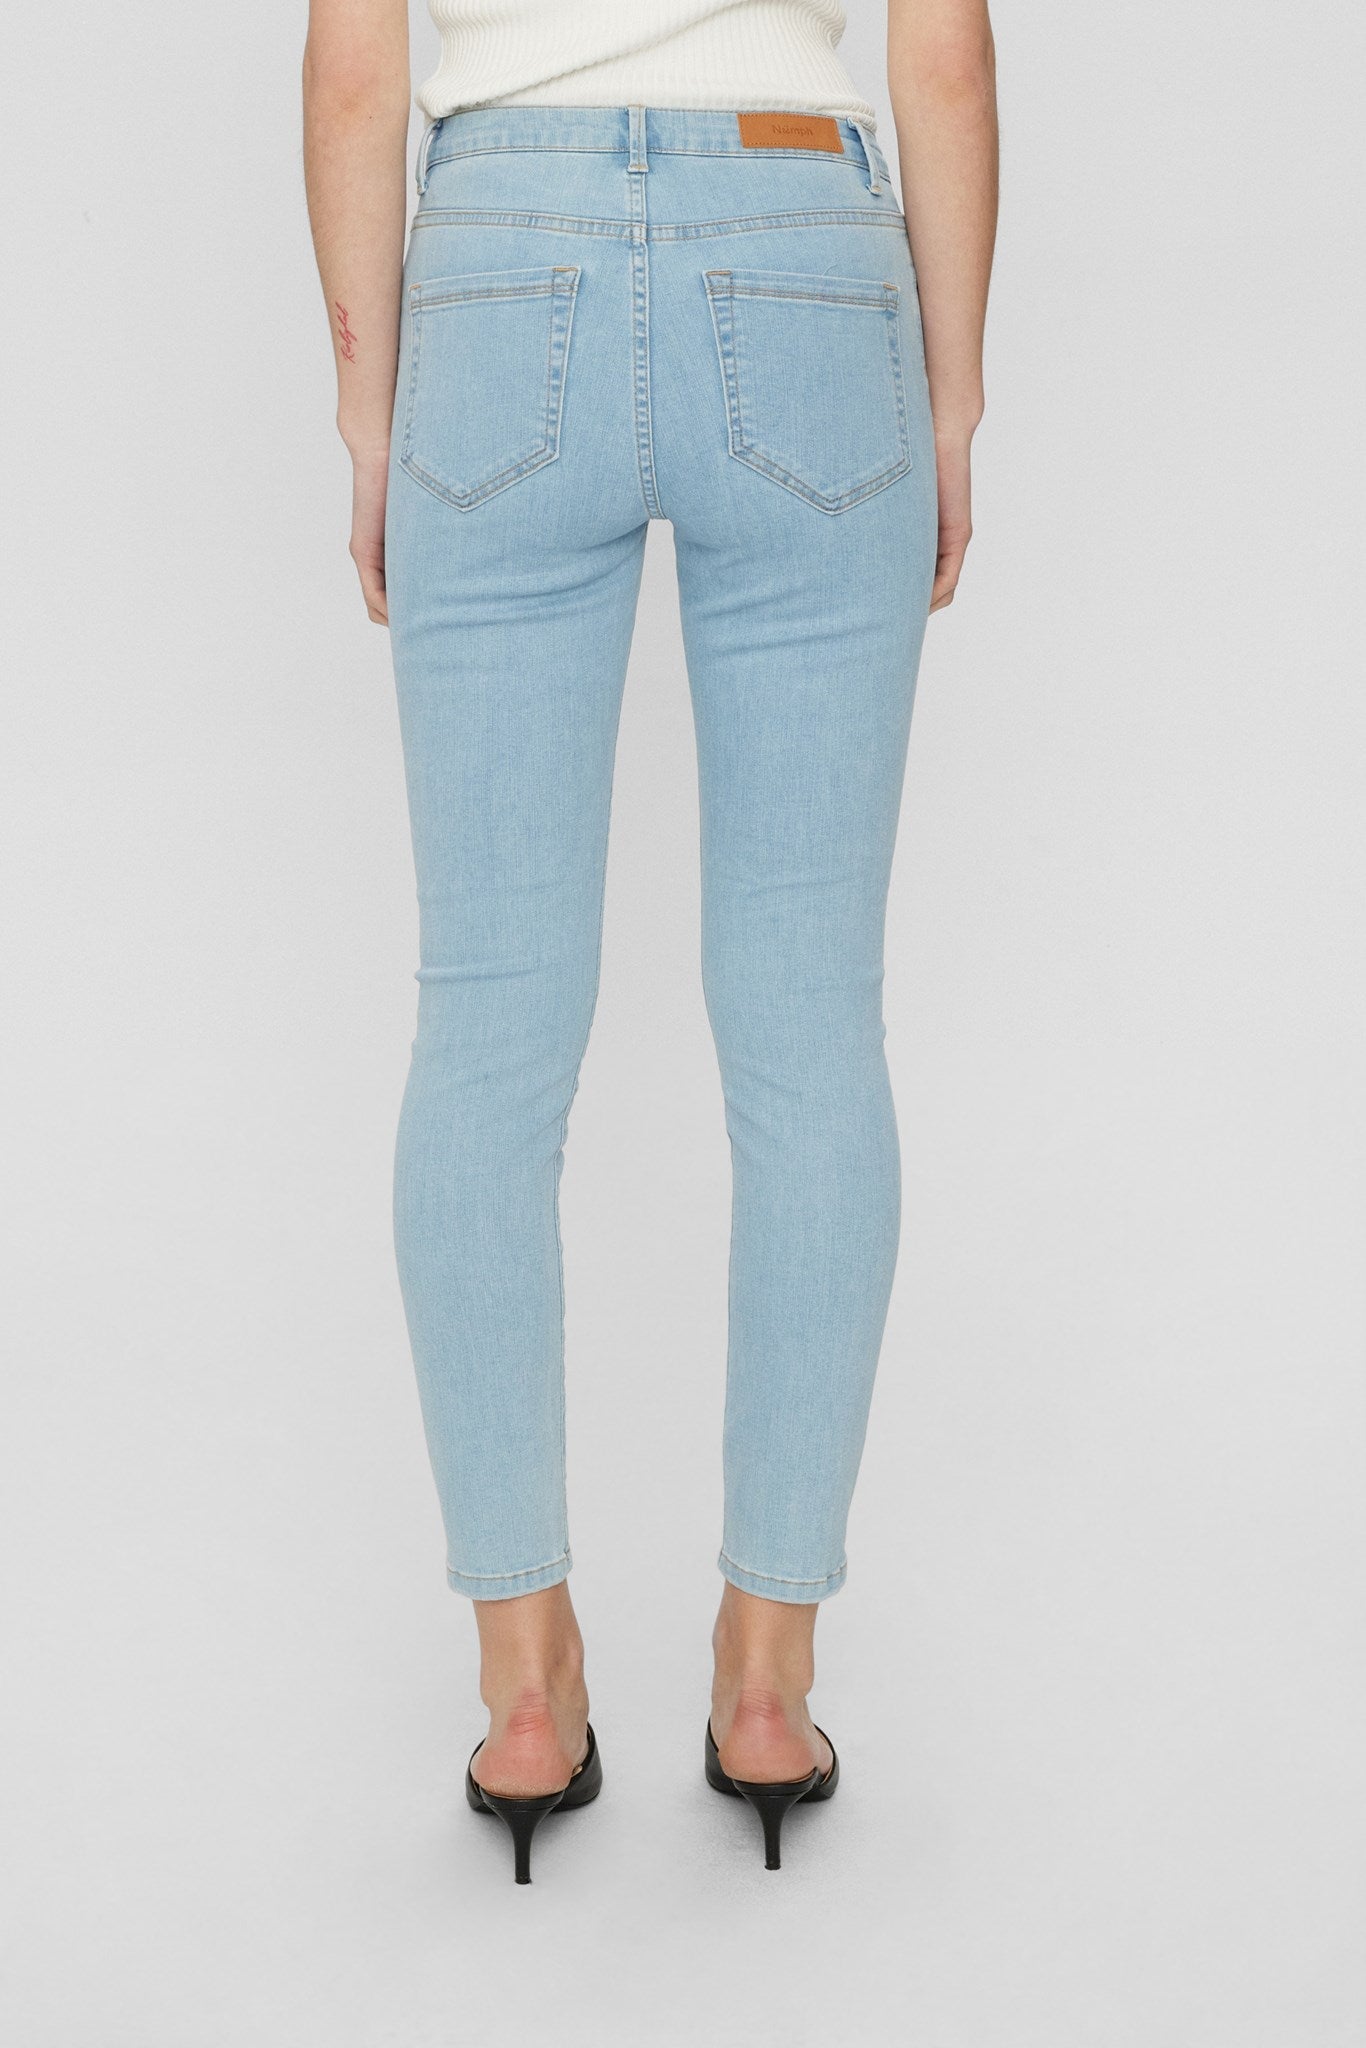 
                  
                    NUSIDNEY Light Blue Denim Cropped Jeans - Pulz Jeans
                  
                